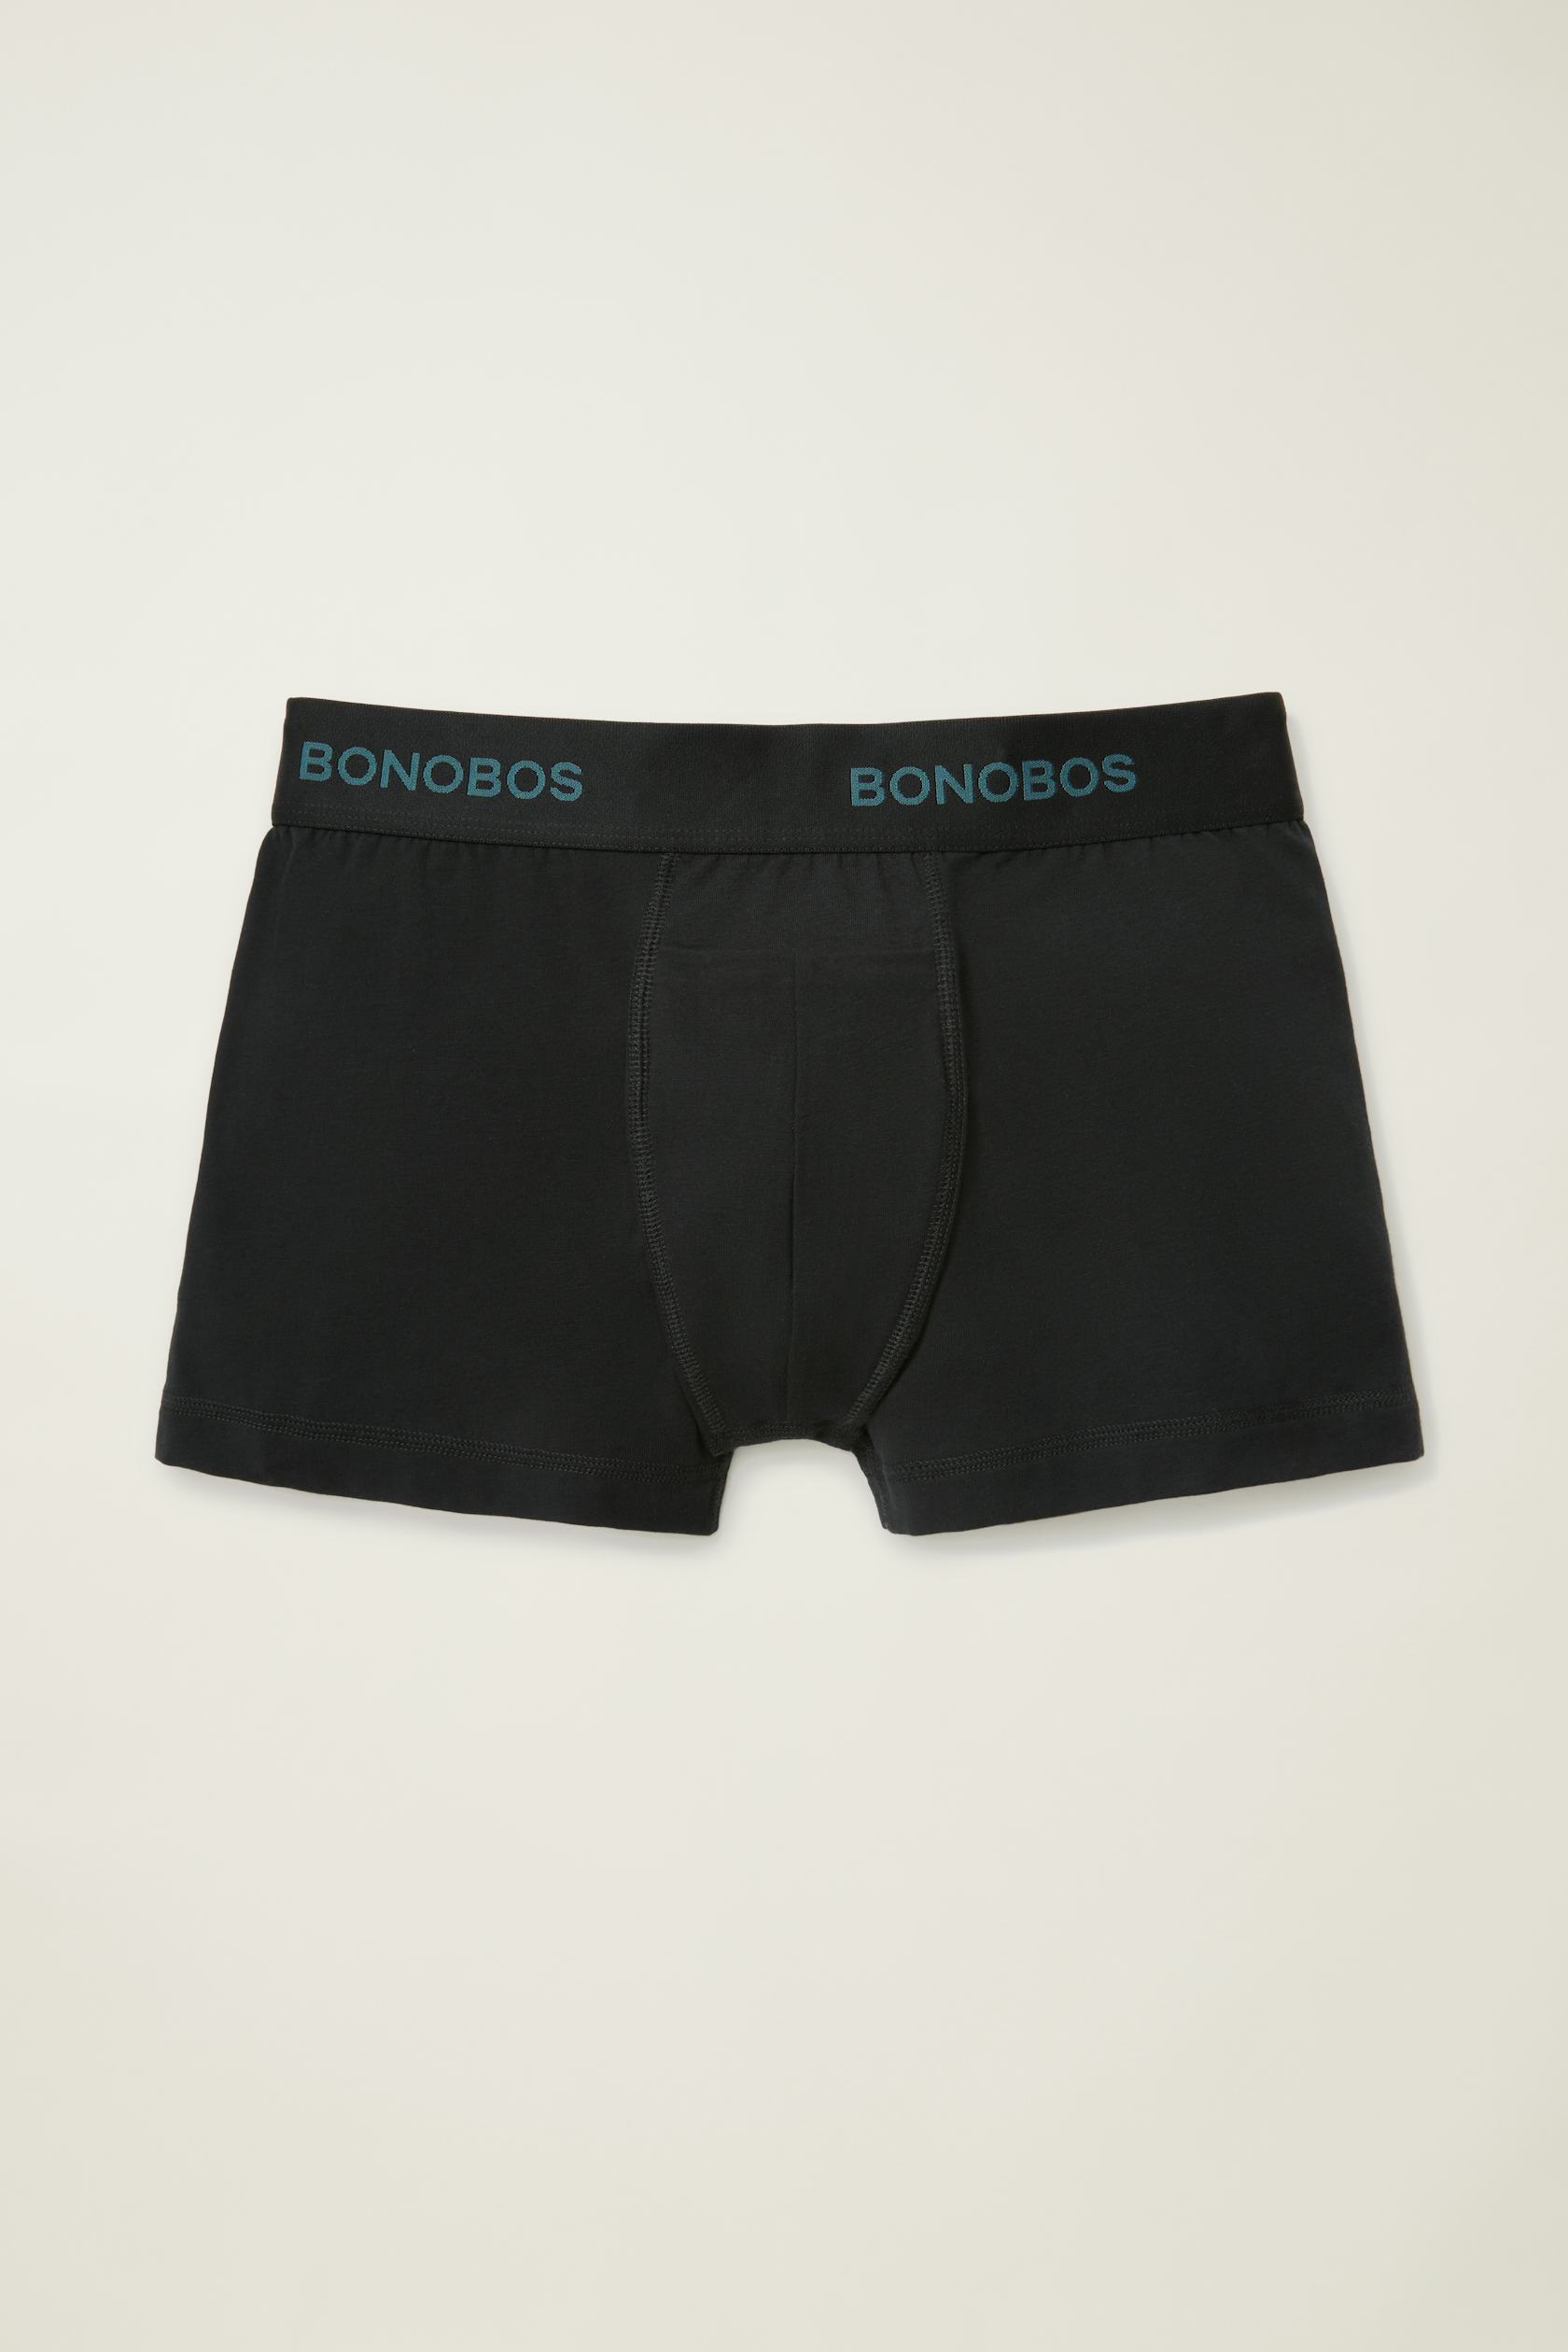 Men's Underwear | Bonobos